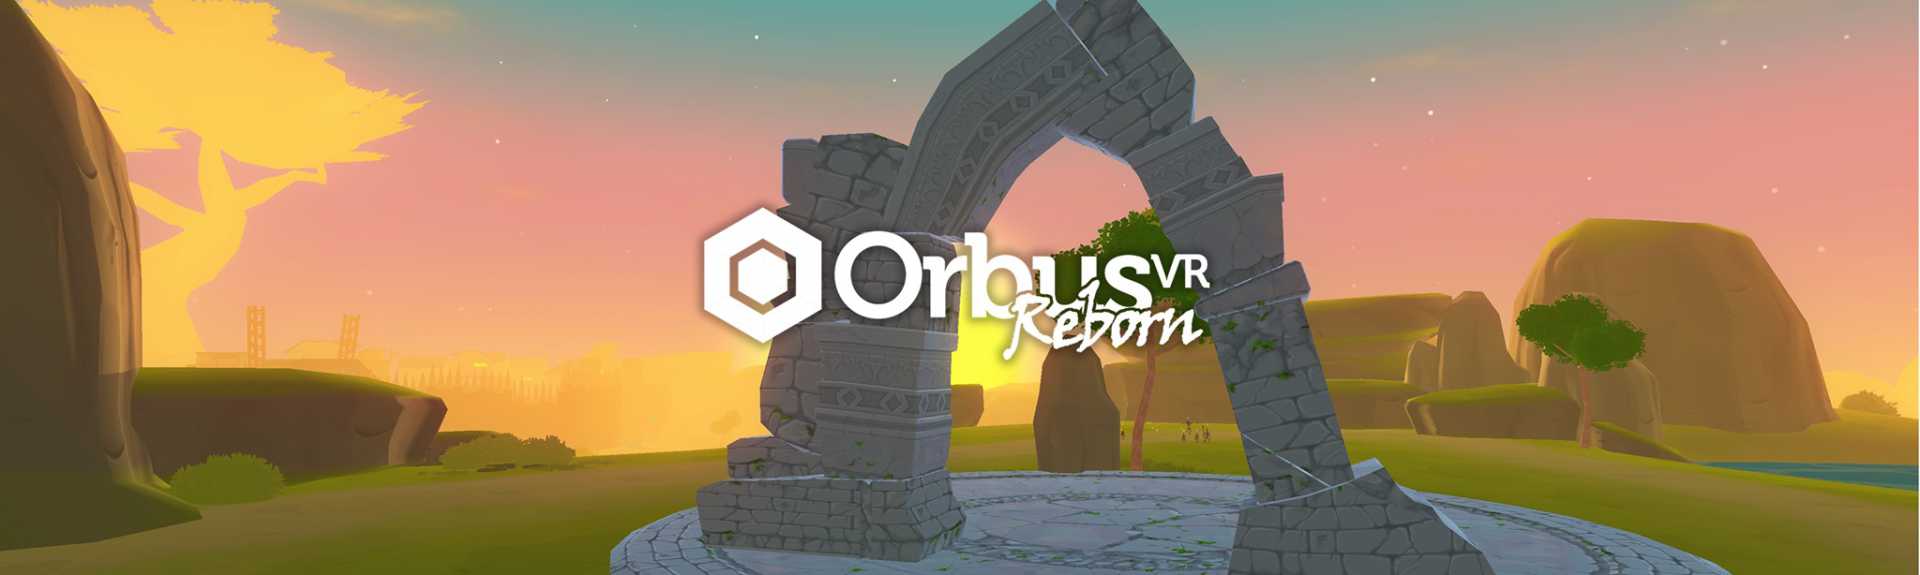 OrbusVR: Reborn